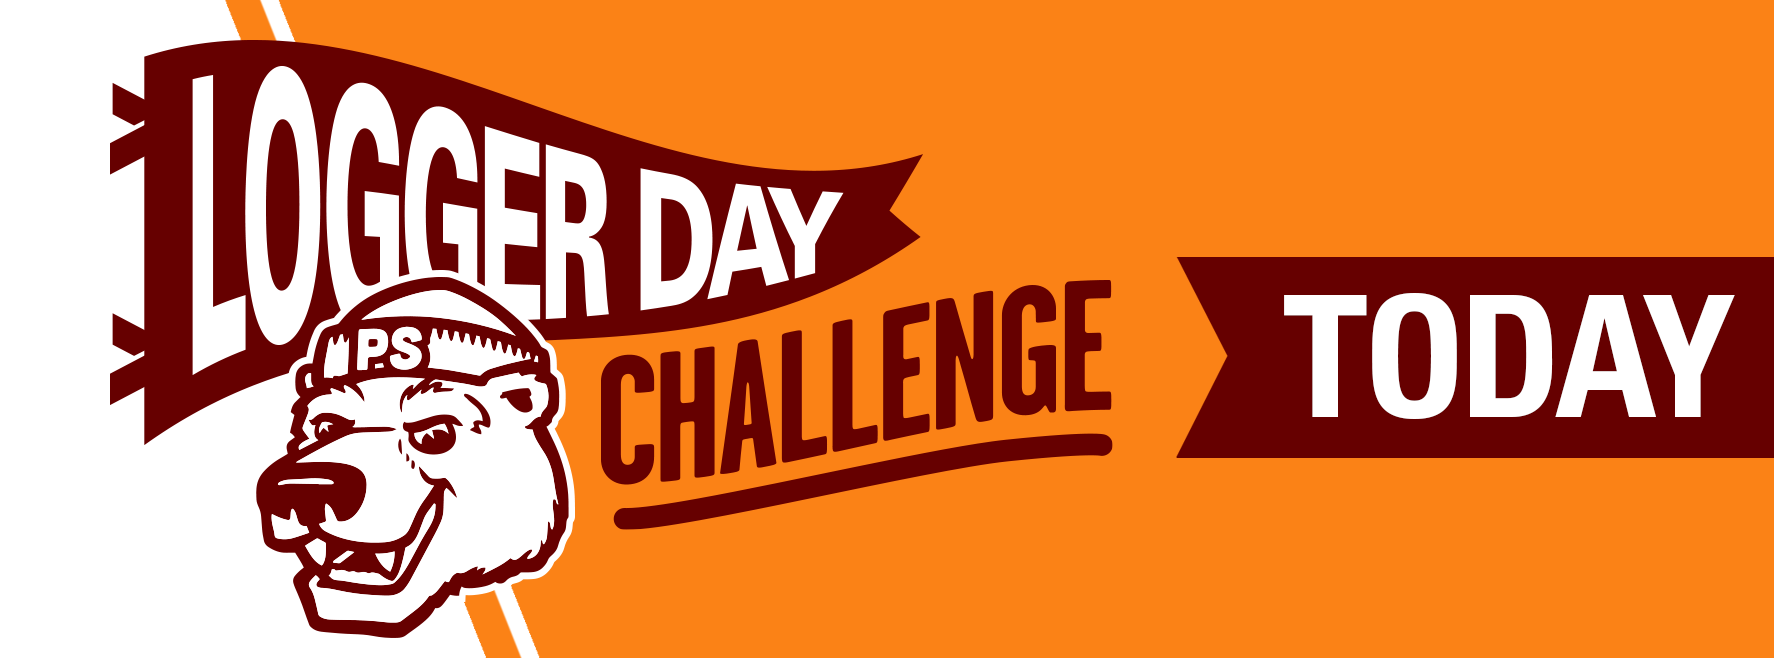 Logger Day Challenge Facebook Cover Art